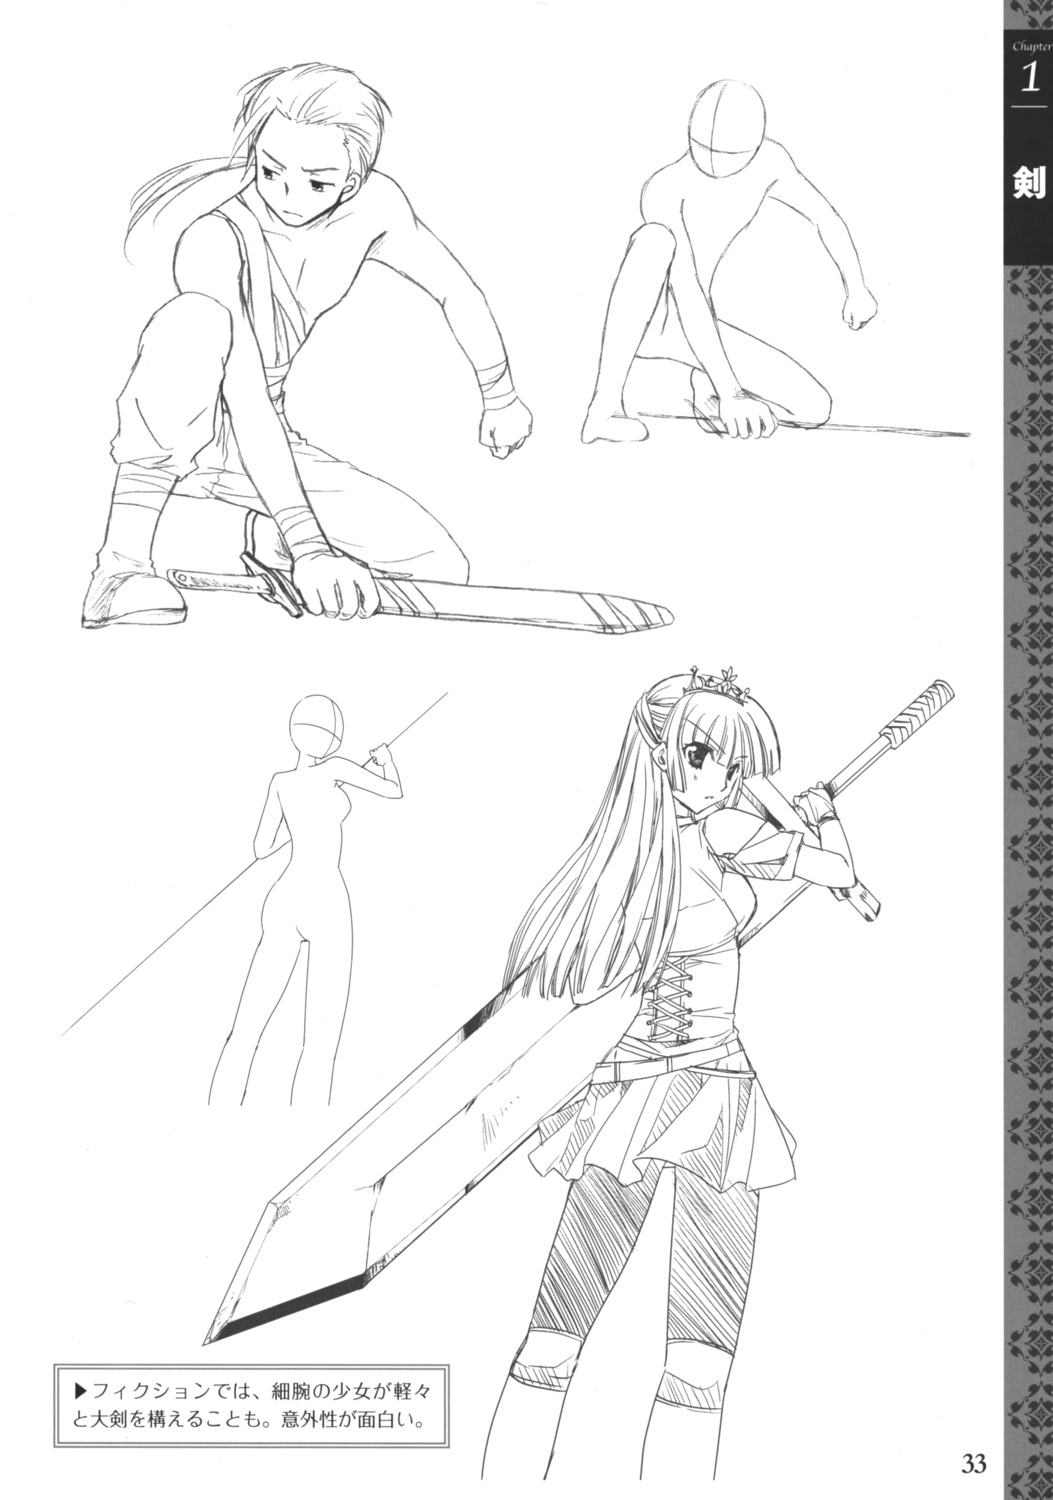 monochrome sketch sword